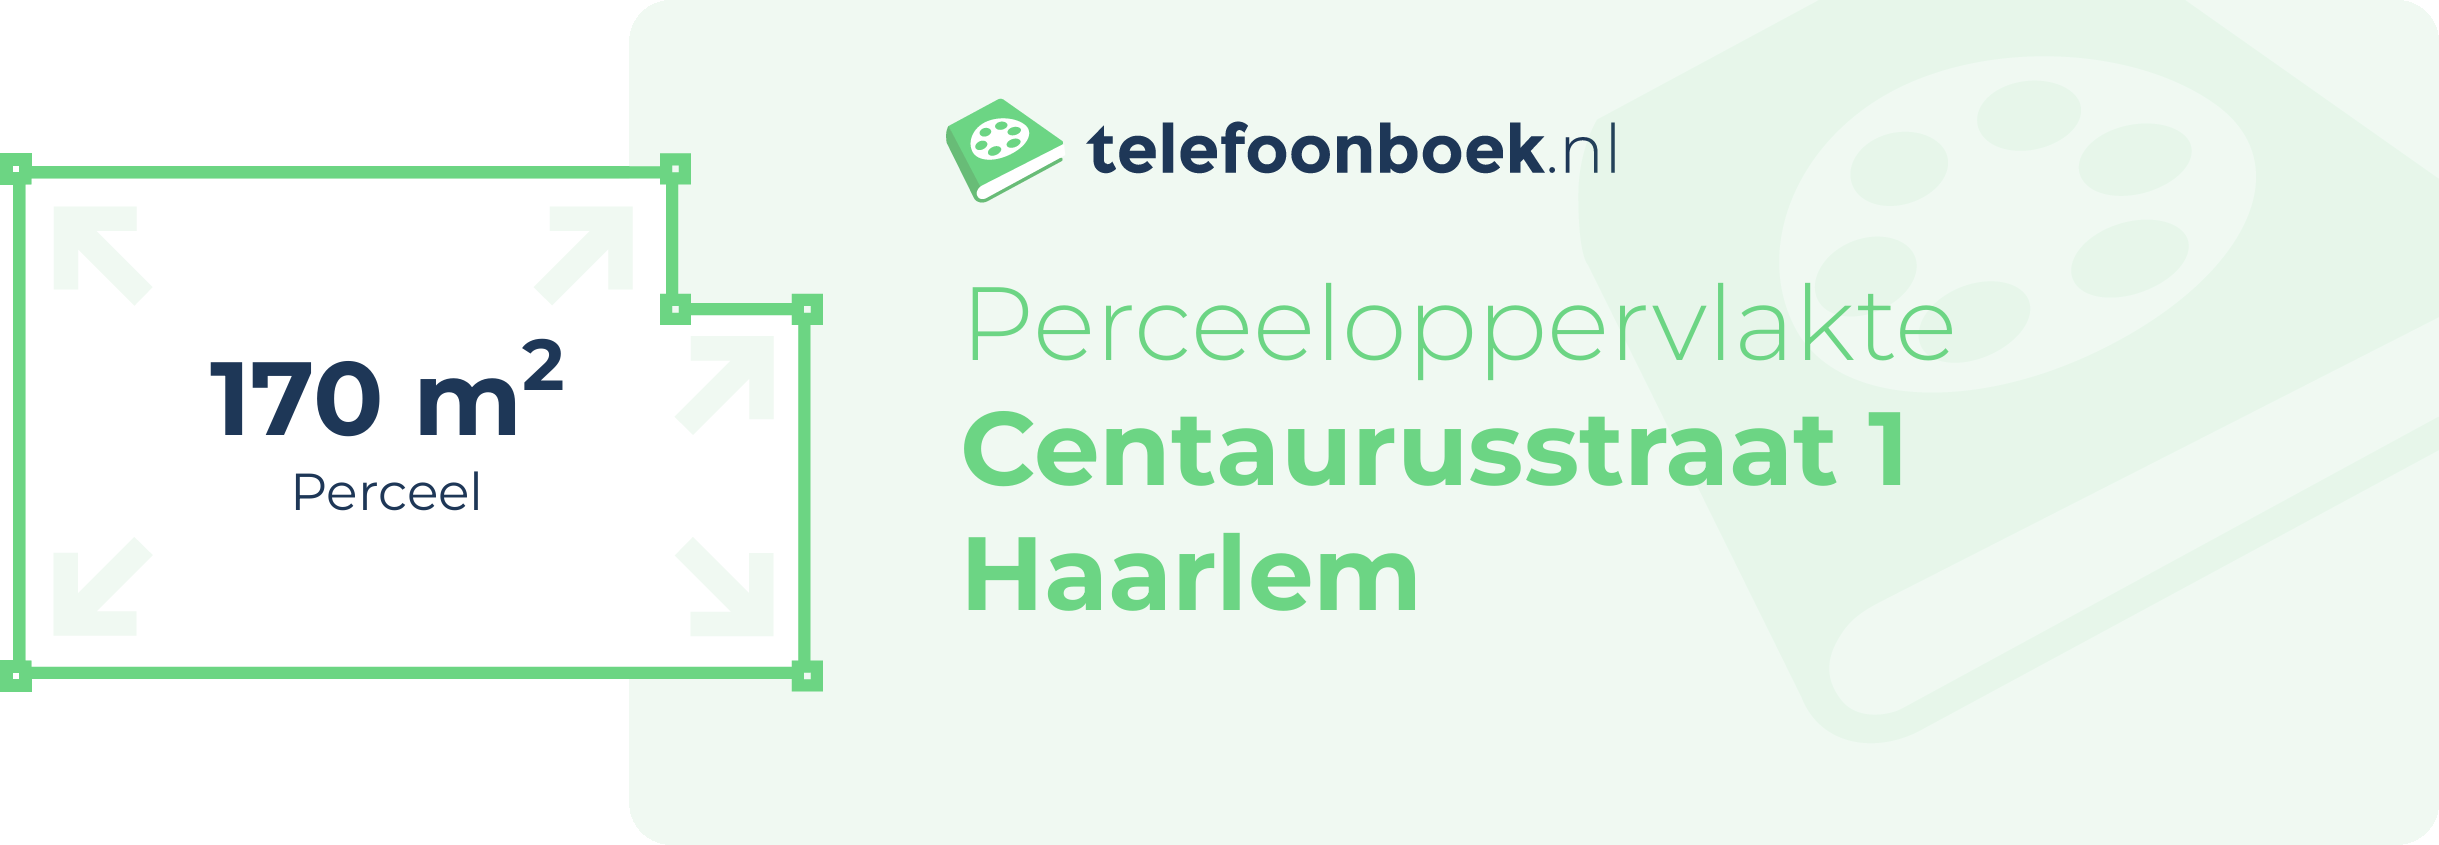 Perceeloppervlakte Centaurusstraat 1 Haarlem